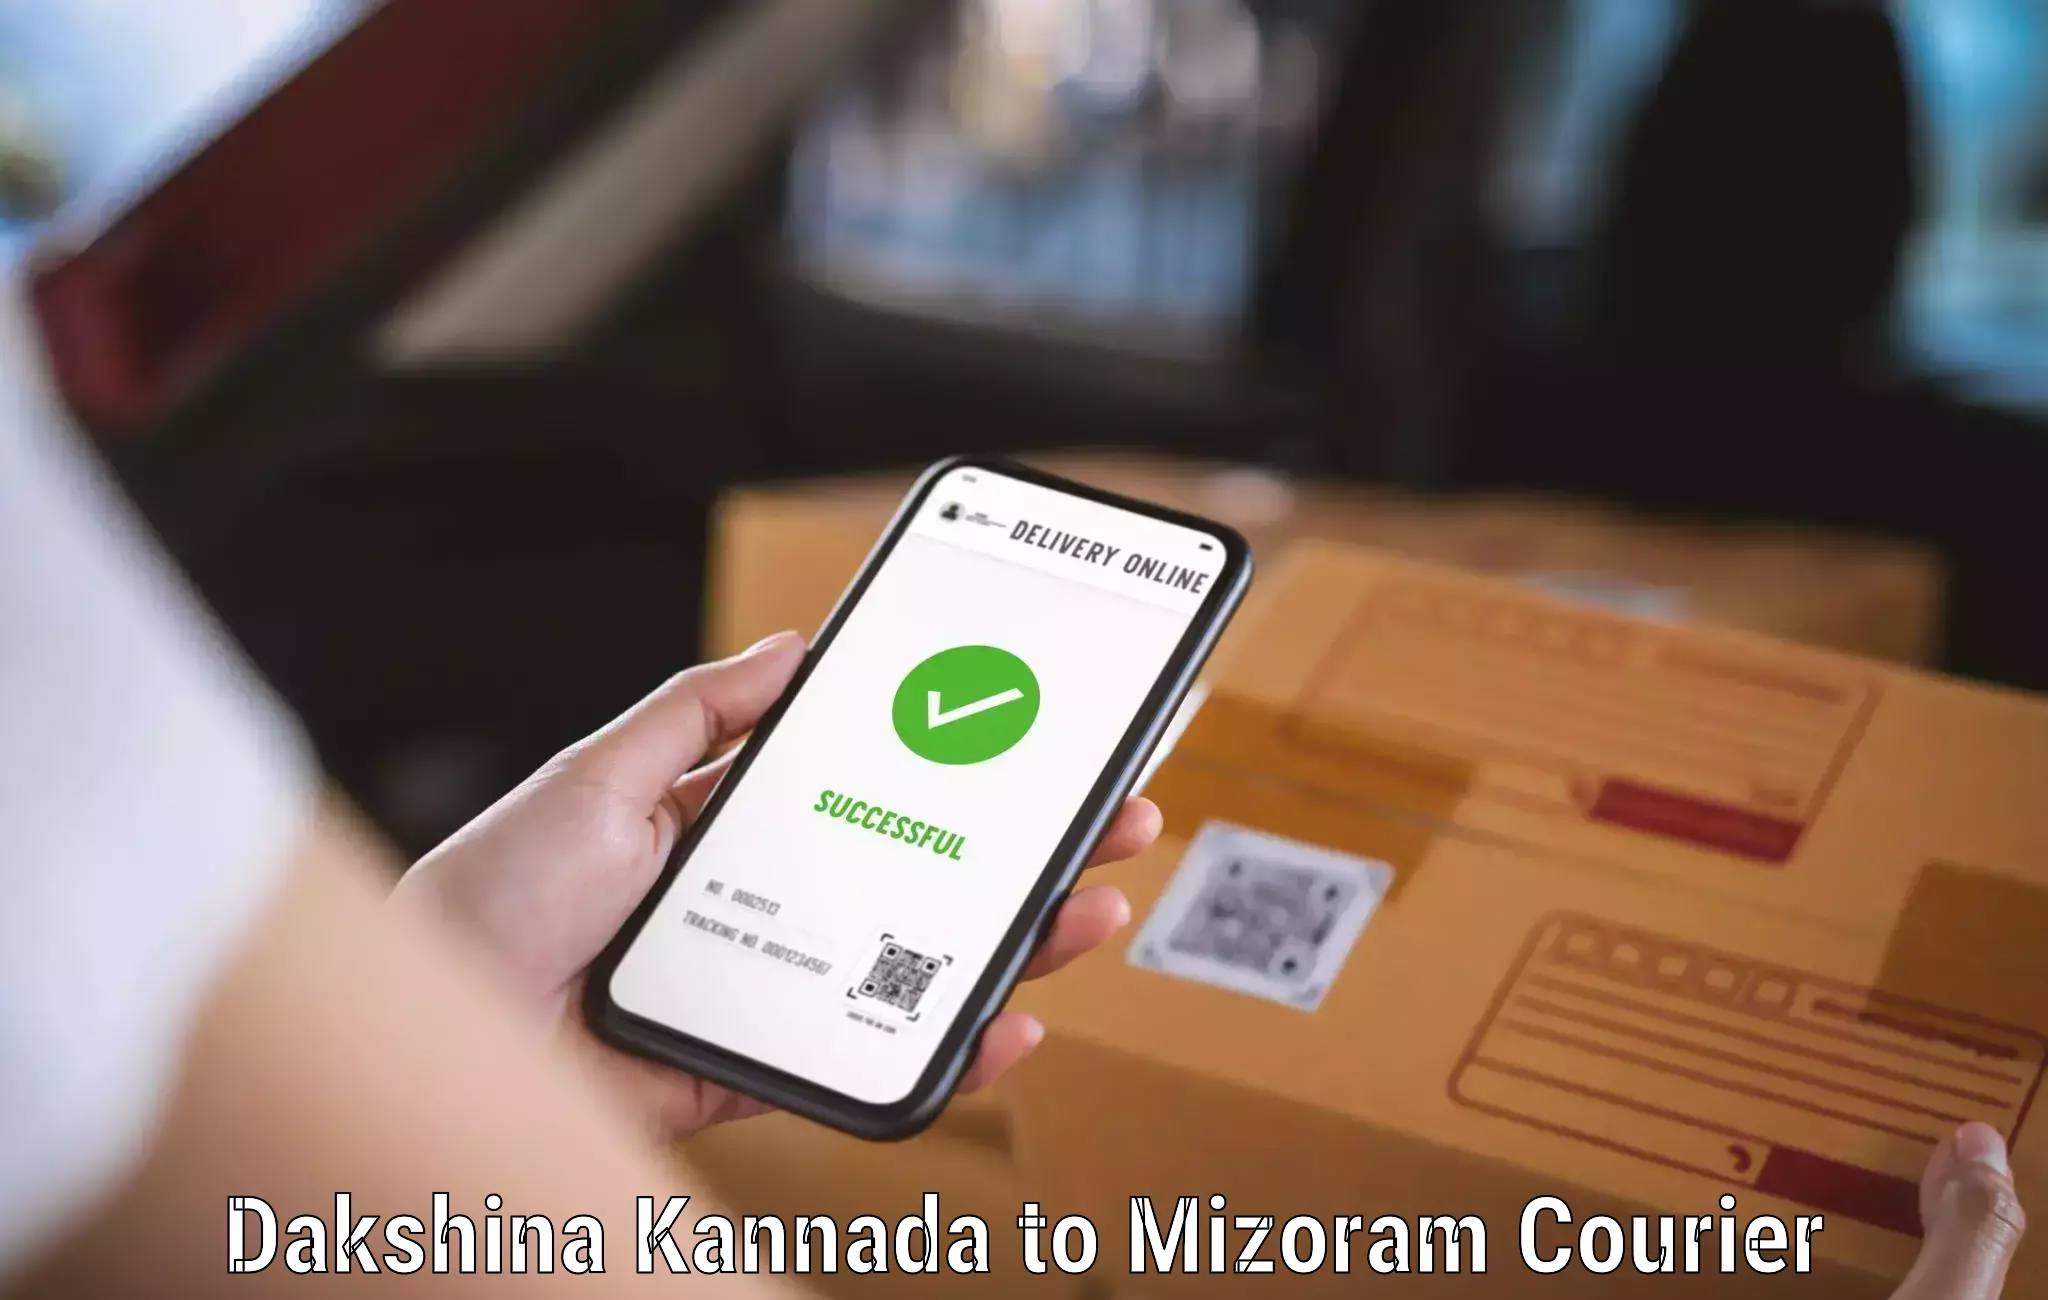 Courier service partnerships Dakshina Kannada to Mizoram